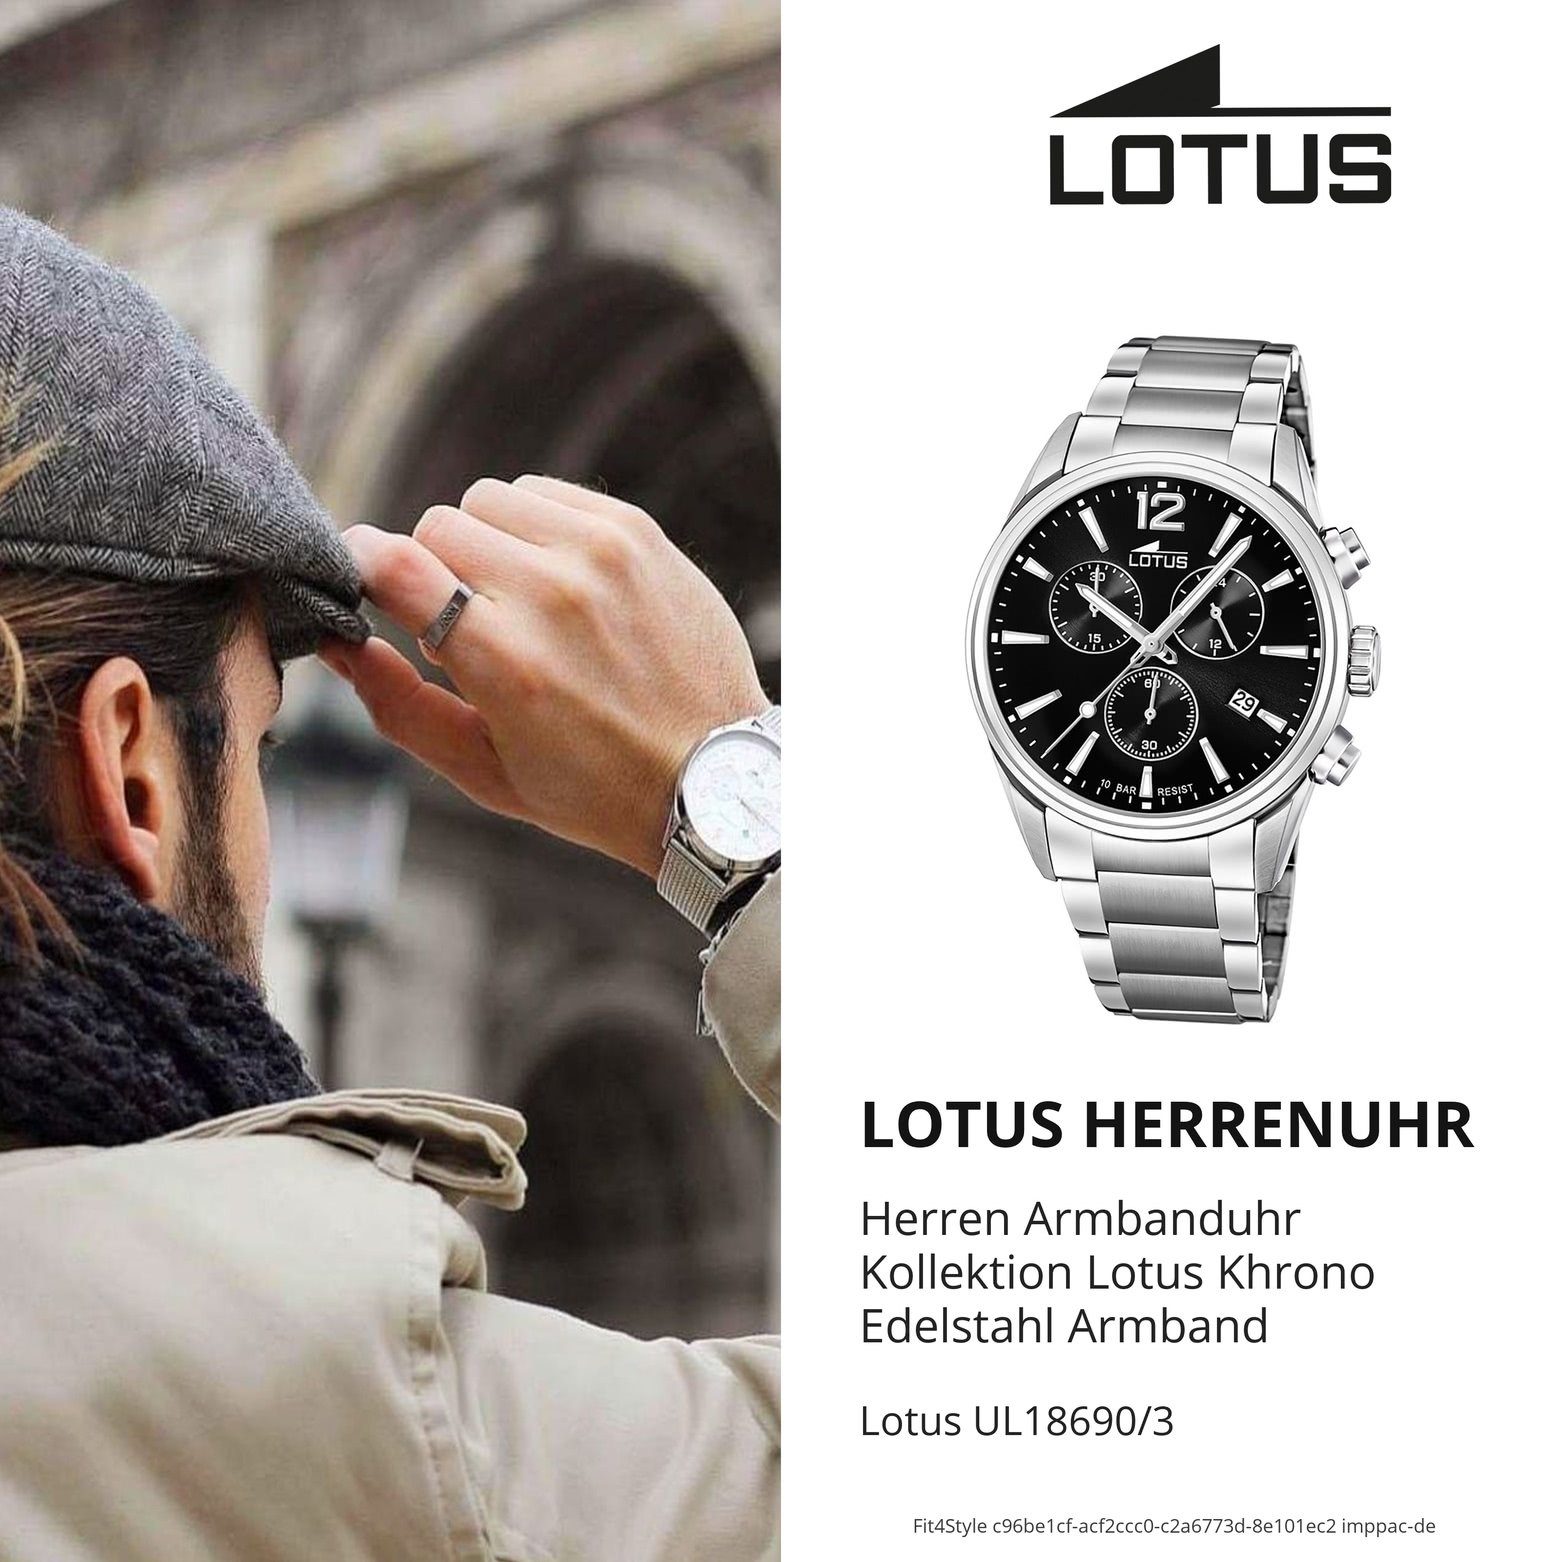 rund, (ca. LOTUS Edelstahlarmband Uhr groß Quarzuhr silber Lotus Sport Herrenuhr Herren Edelstahl, 42mm) 18690/3